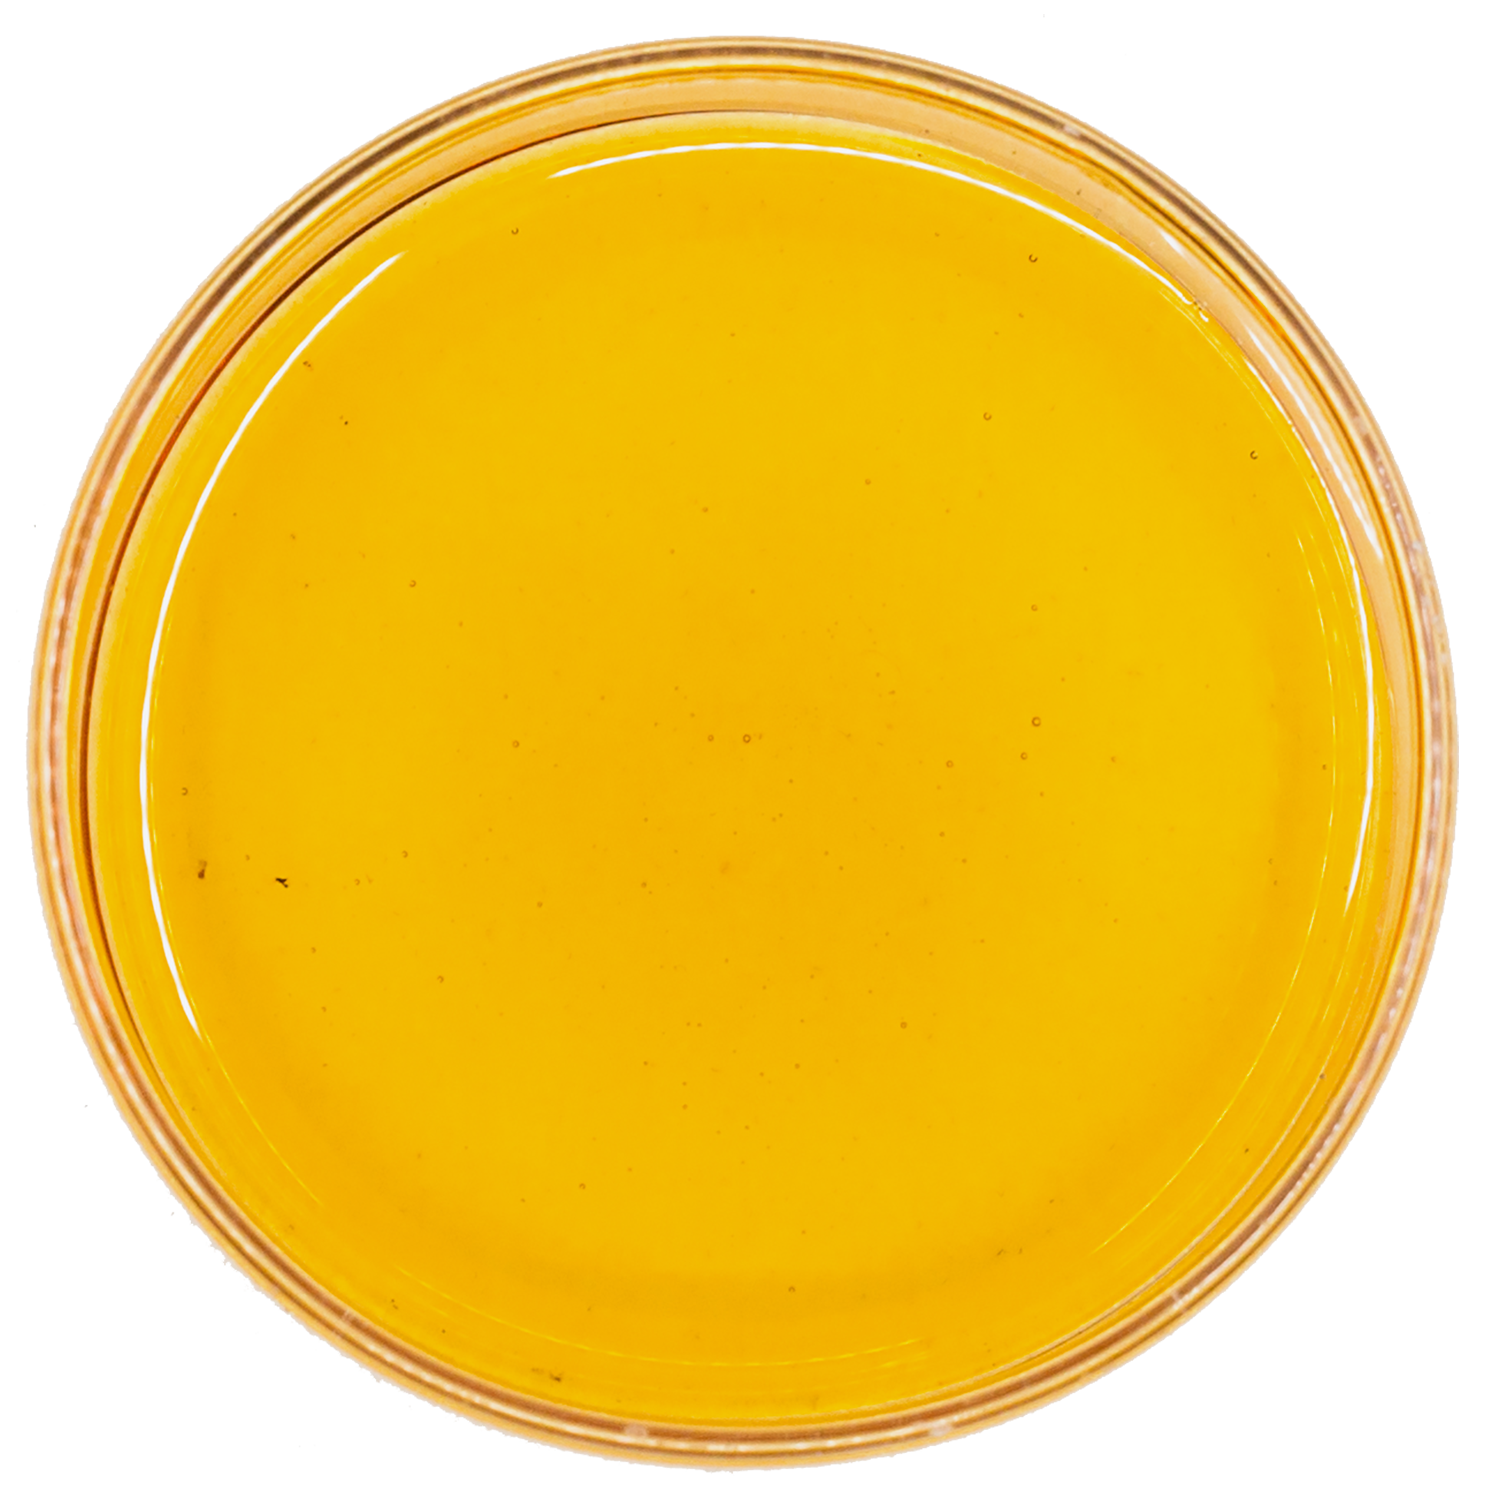 Petri dish of amber colored liquid